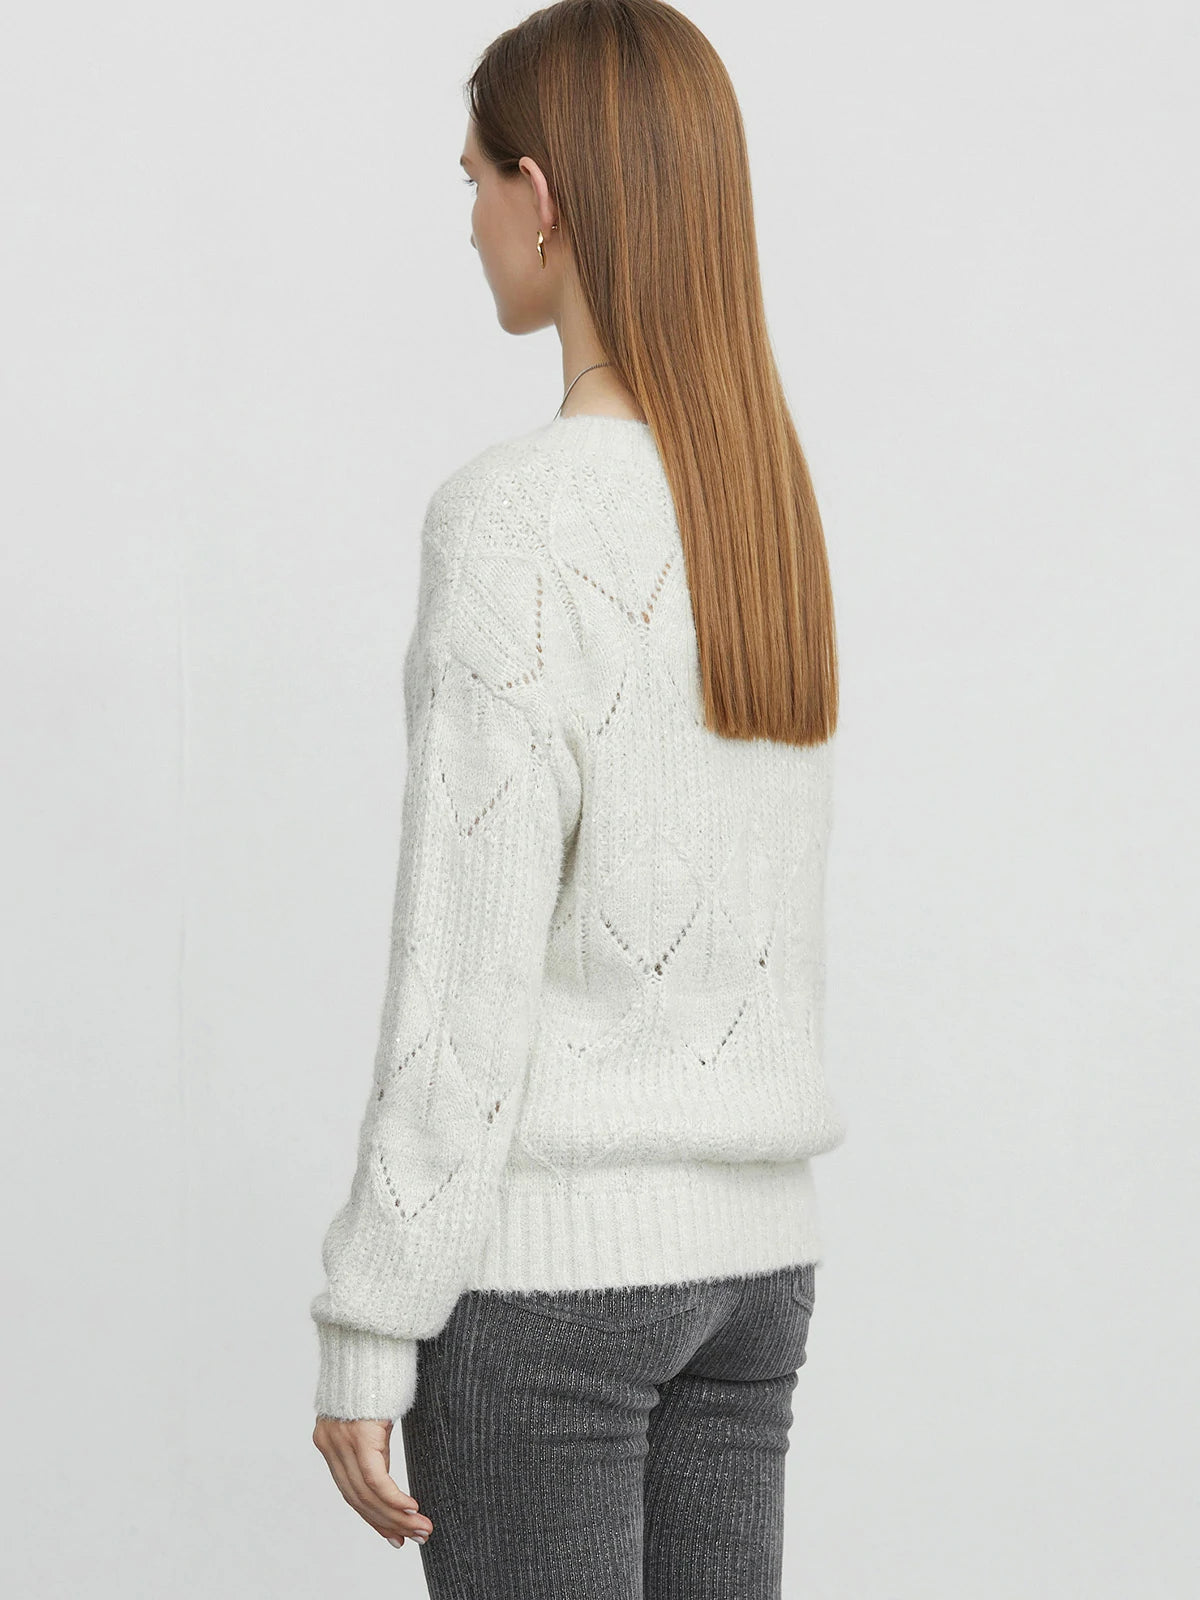 Fashionable  round neck crochet sweater